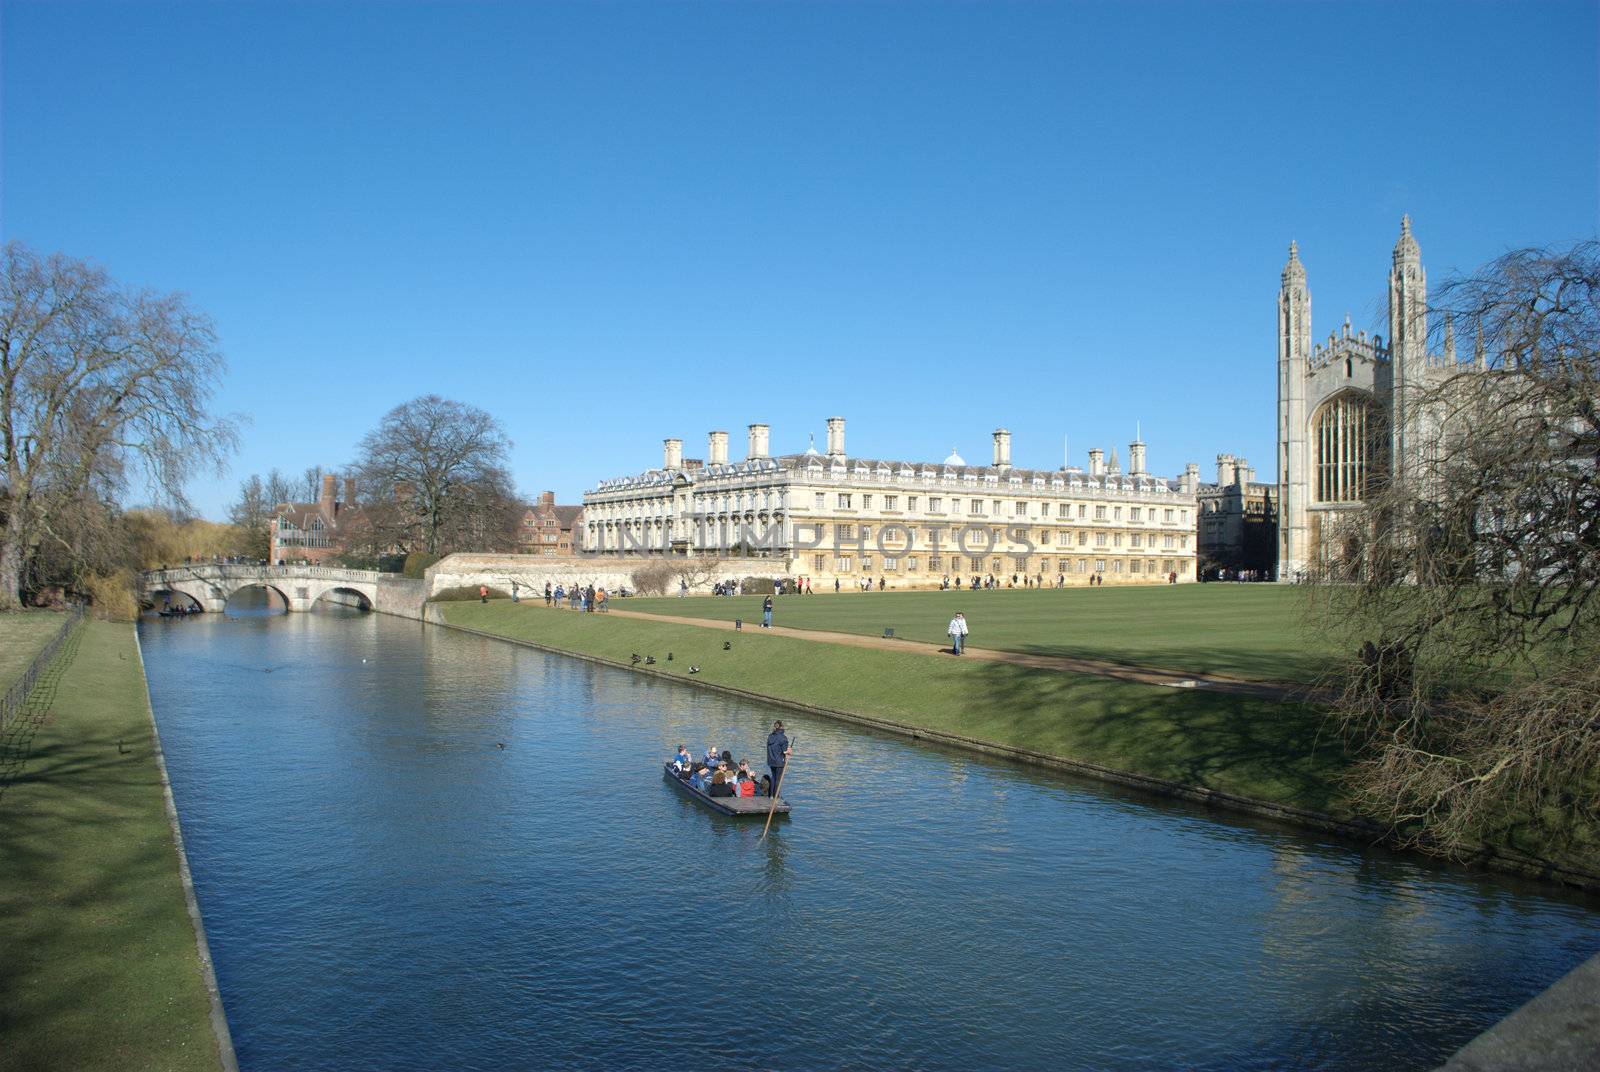 Cambridge Backs by pauws99